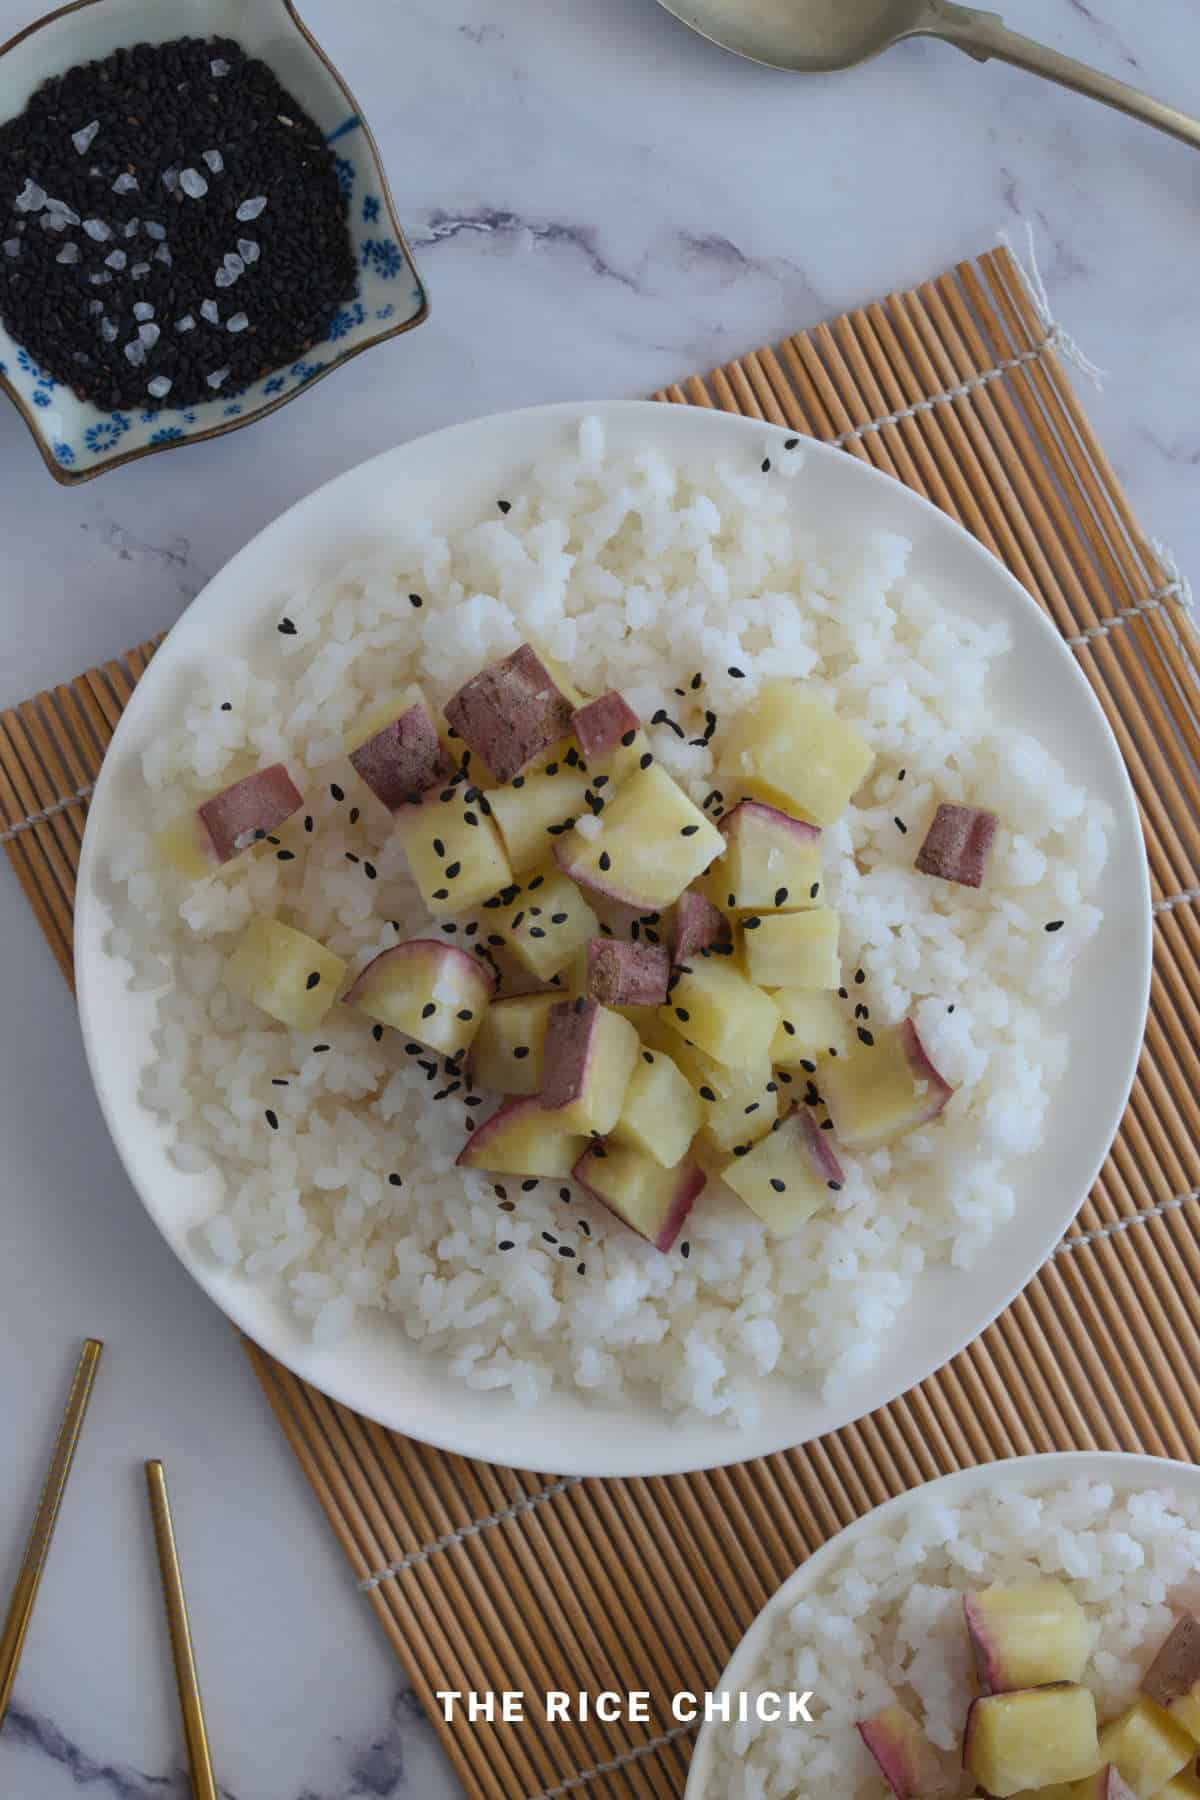 Sweet potato rice with sesame seeds on top.